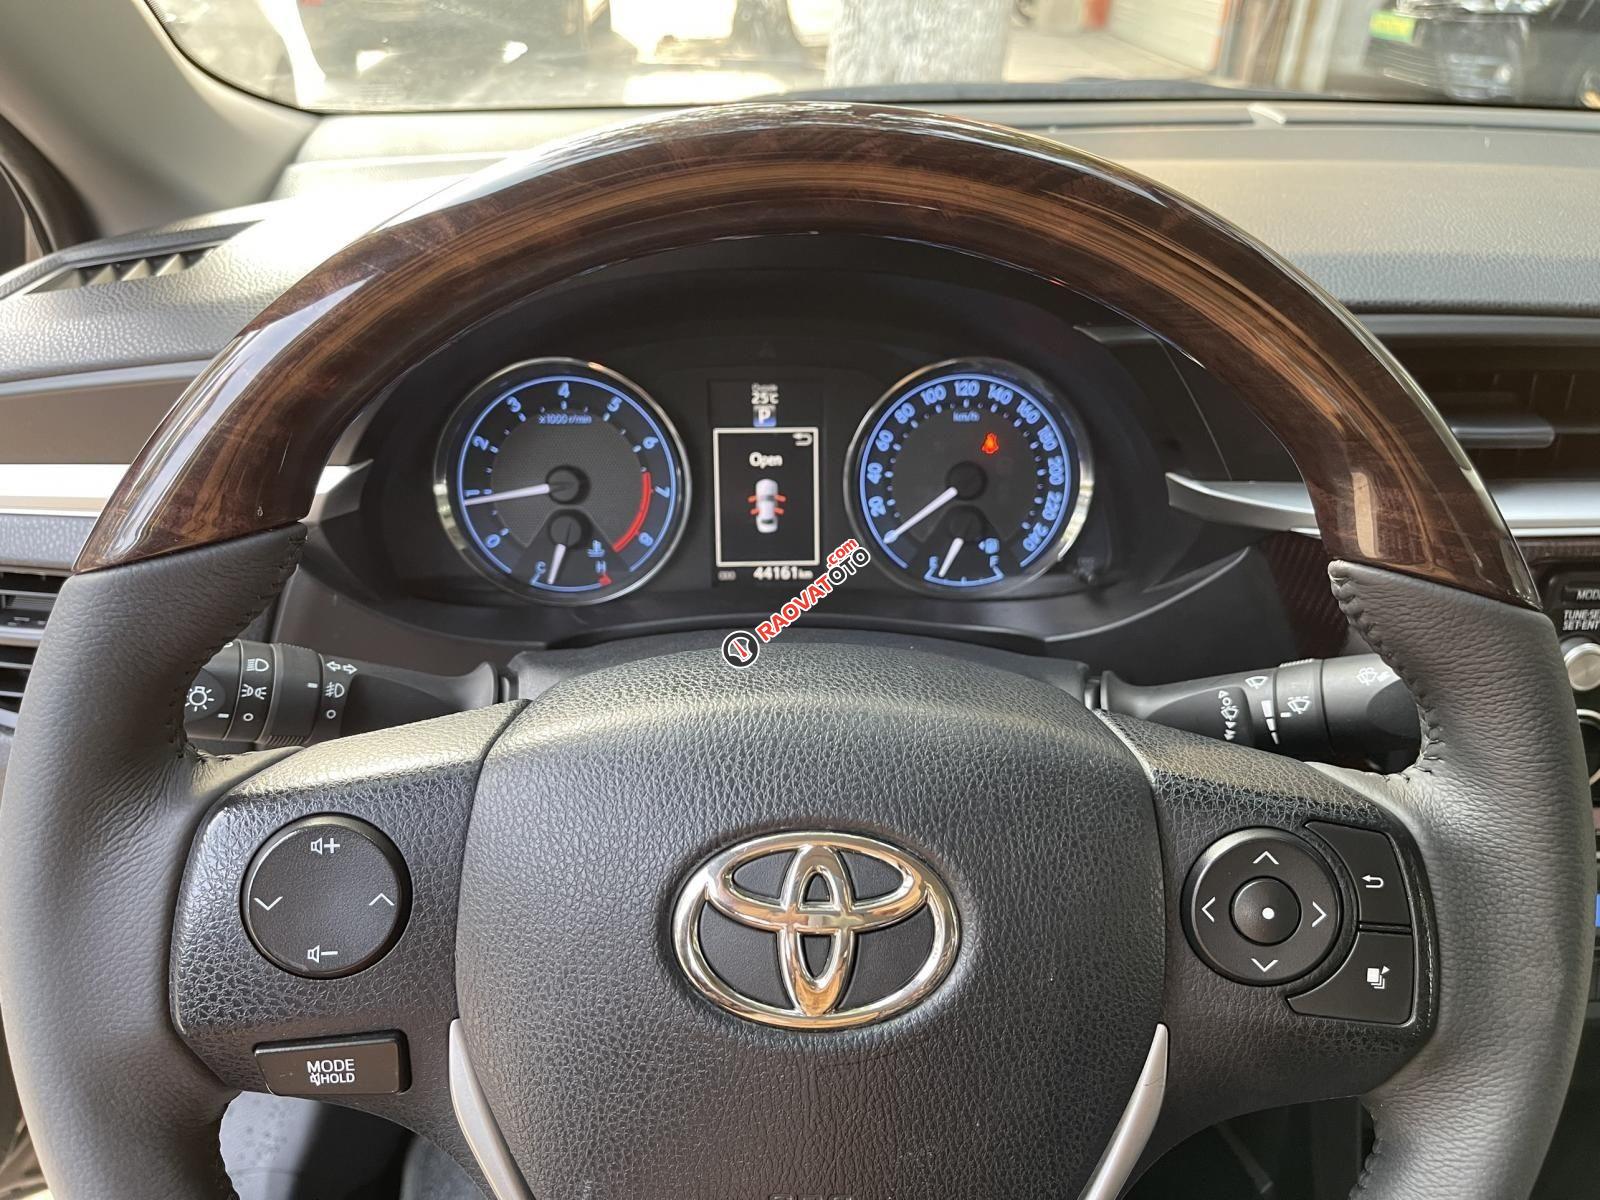 Bán gấp Toyota Corolla Altis 1.8G AT năm 2017, màu đen, còn nguyên dàn lốp, xe rất mới, giá tốt-11